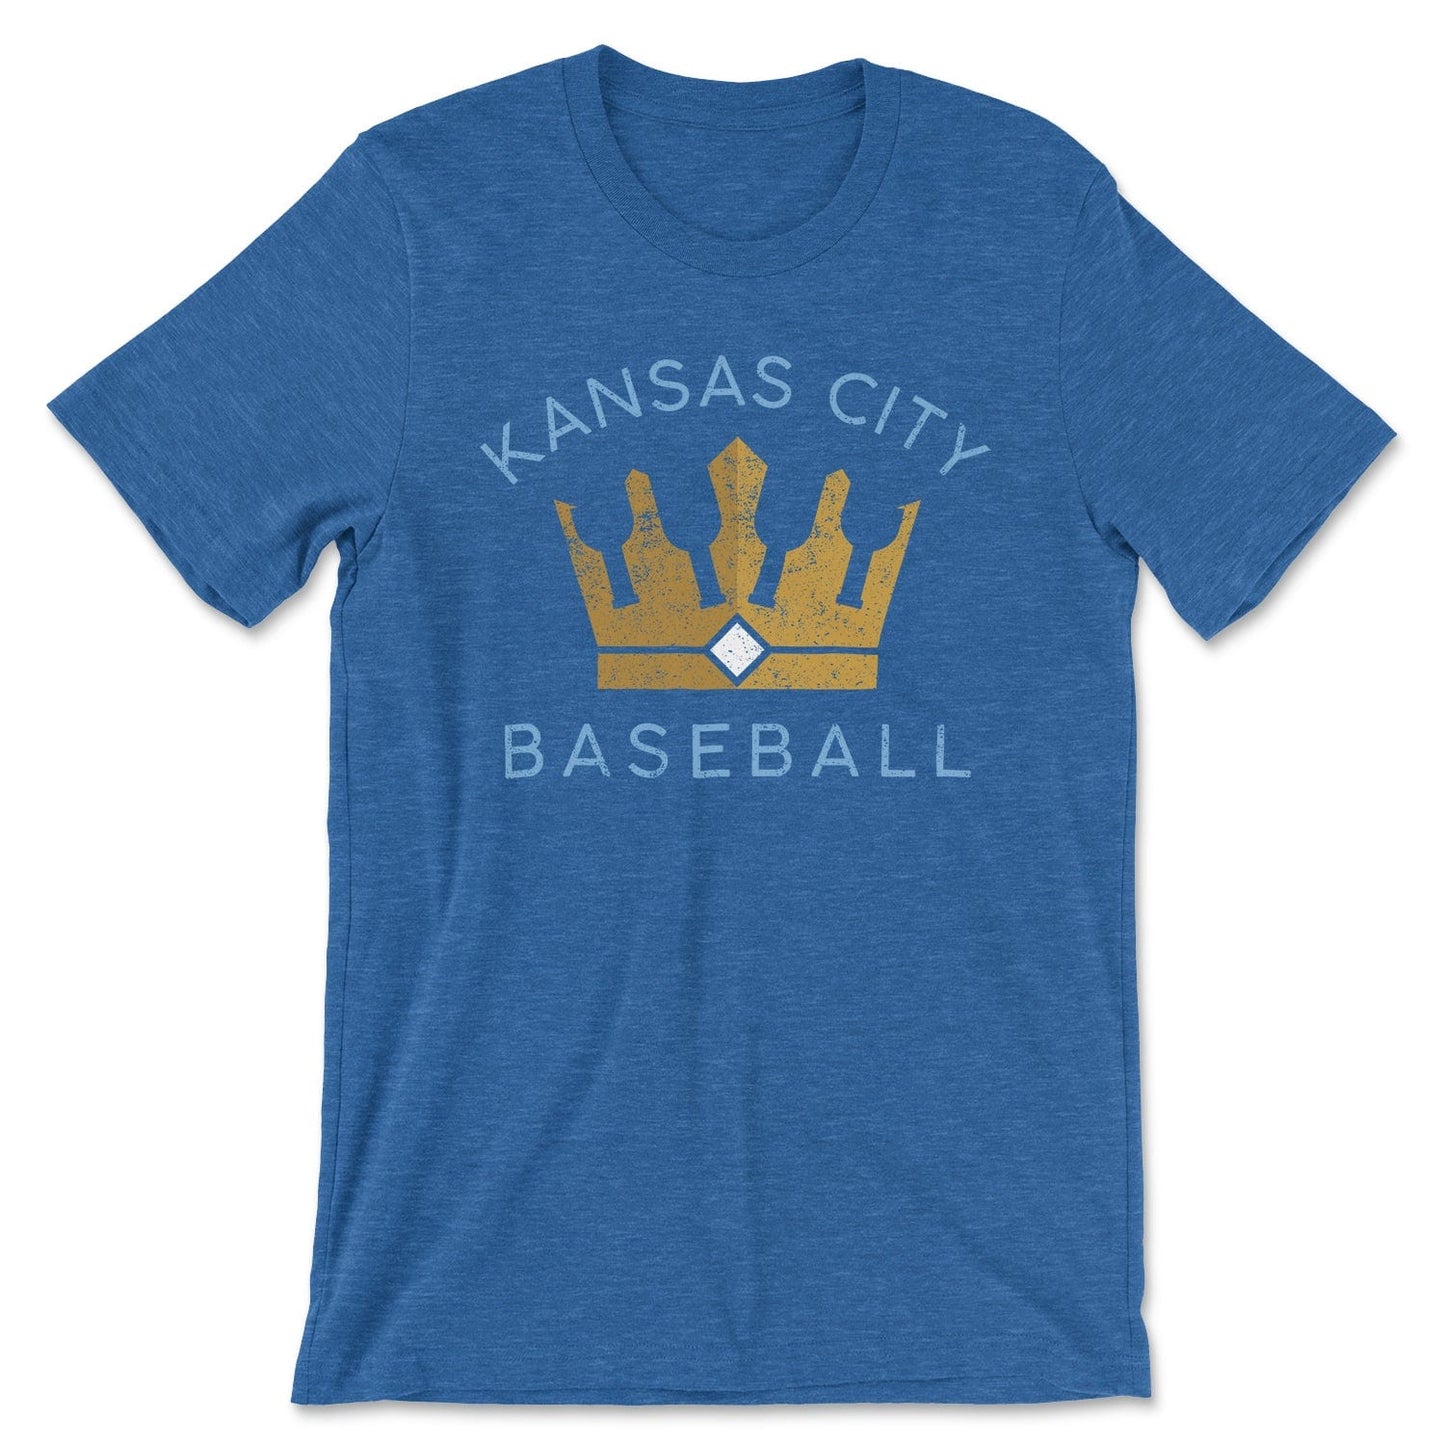 KC Swag Kansas City Royals powder blue/gold KANSAS CITY BASEBALL BOTTLE CROWN on heather royal blue t-shirt